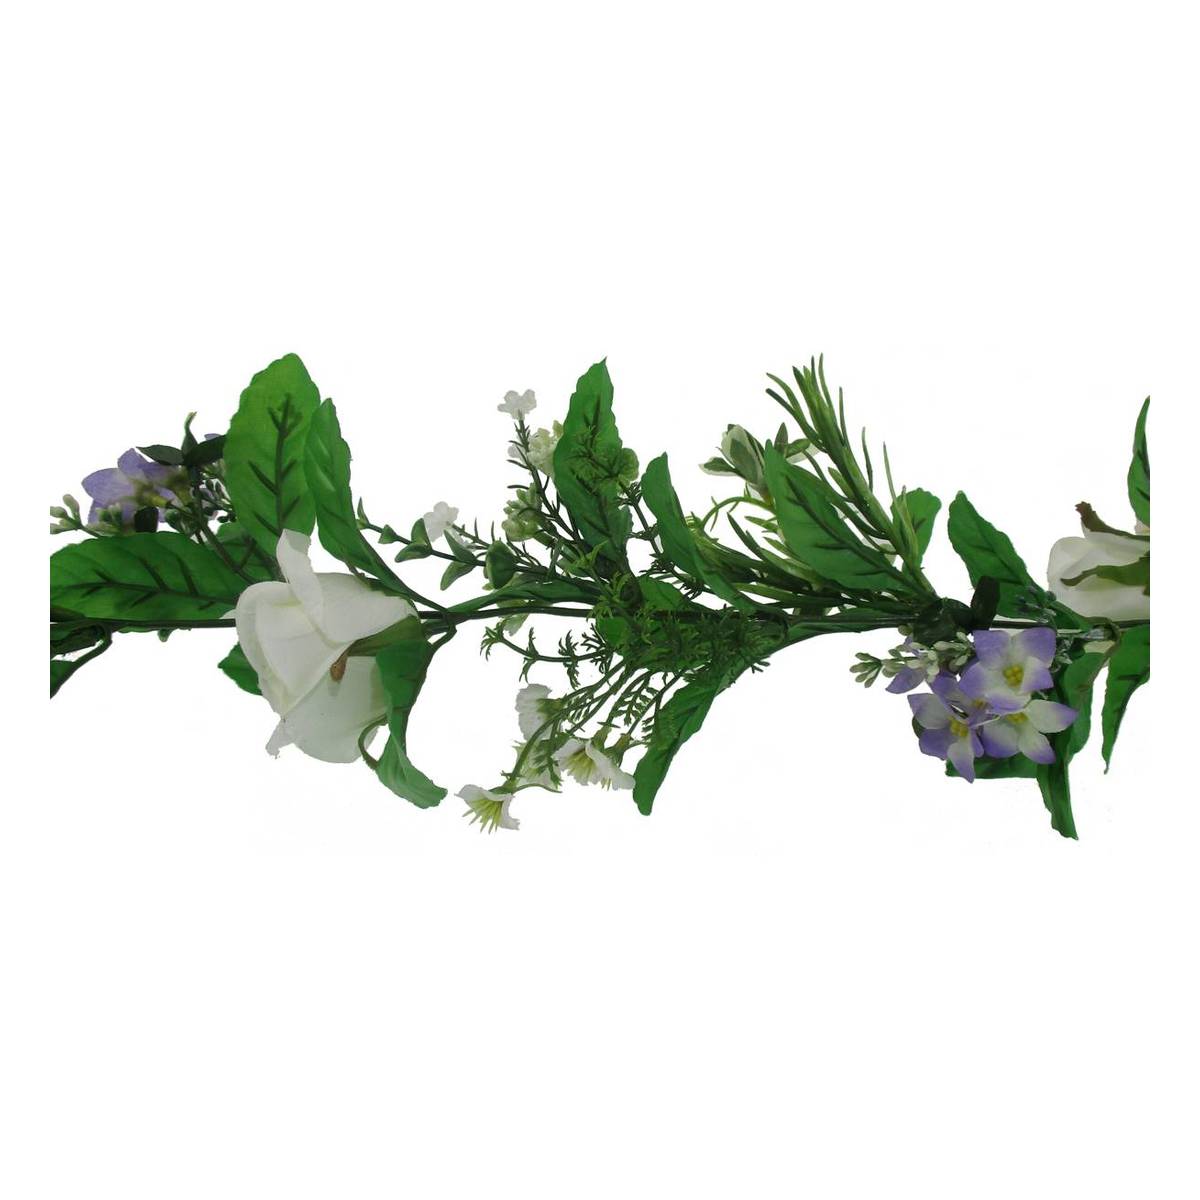 Buy Cream and Blue Spring Flowers Garland 1.8m for GBP 9.50 | Hobbycraft UK